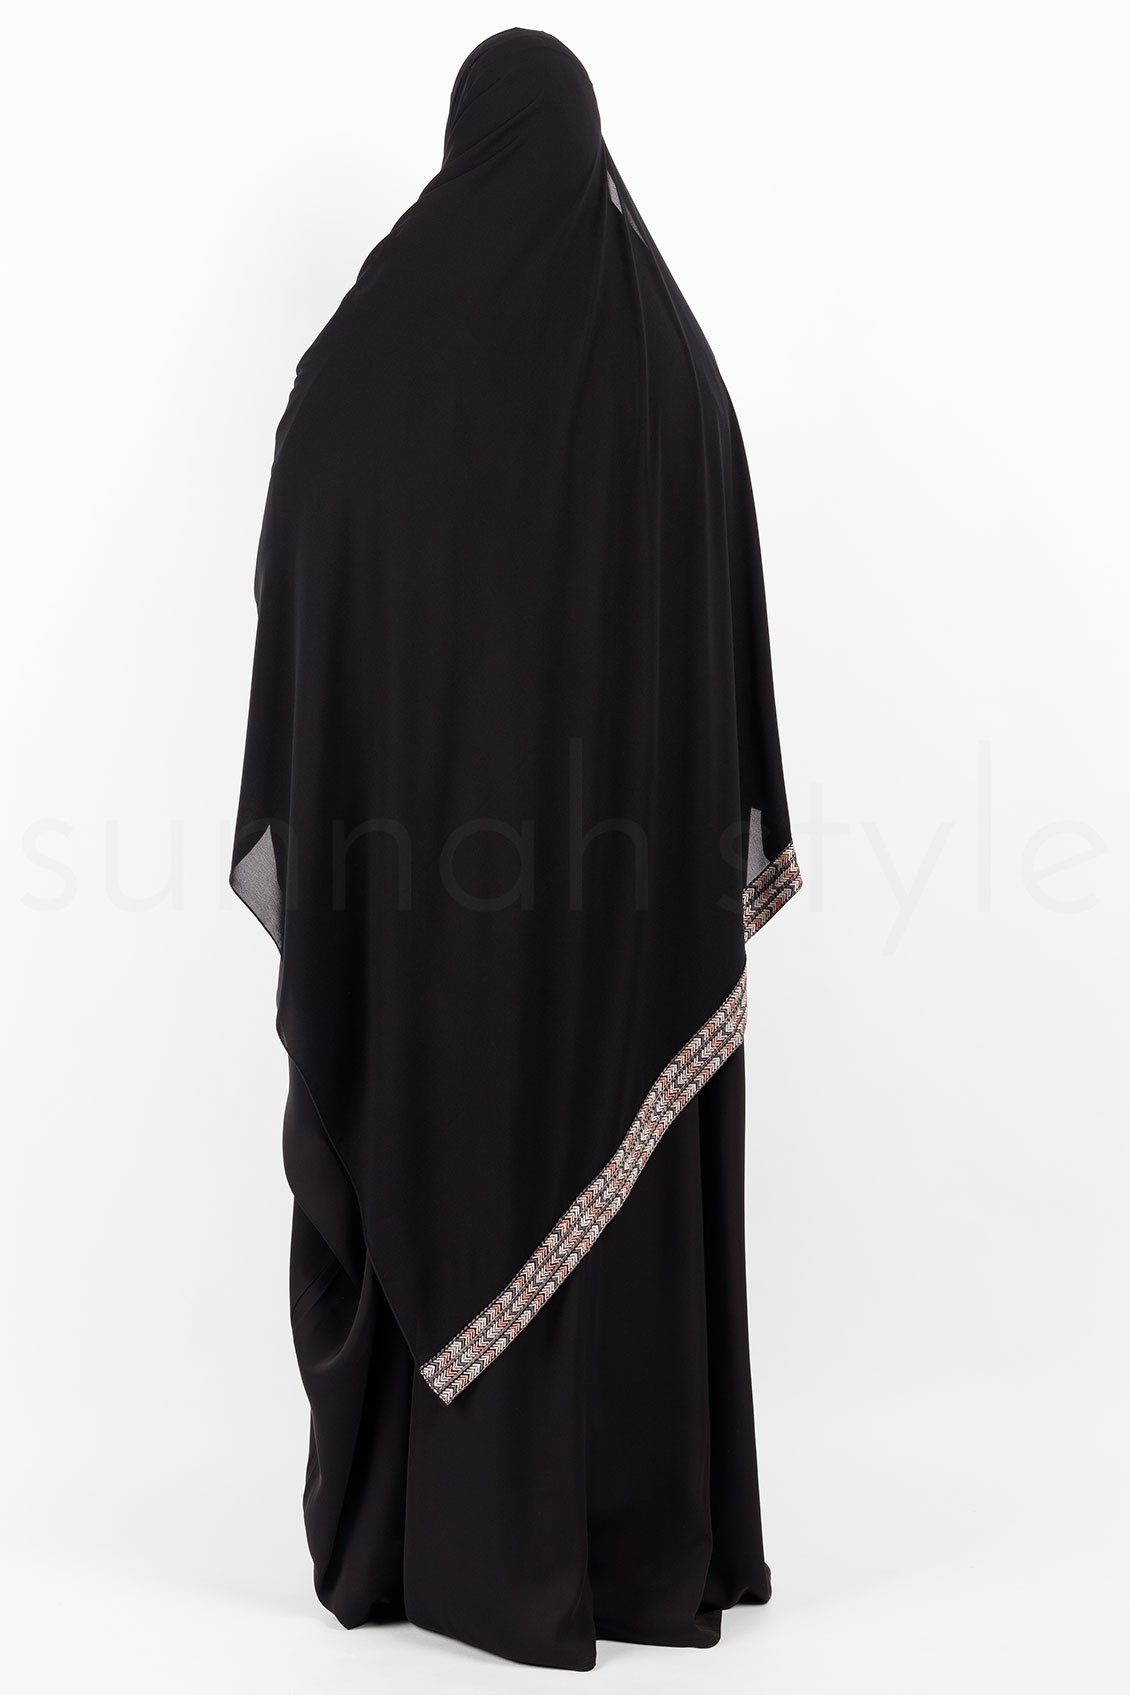 Sunnah Style Chevron Shayla XL